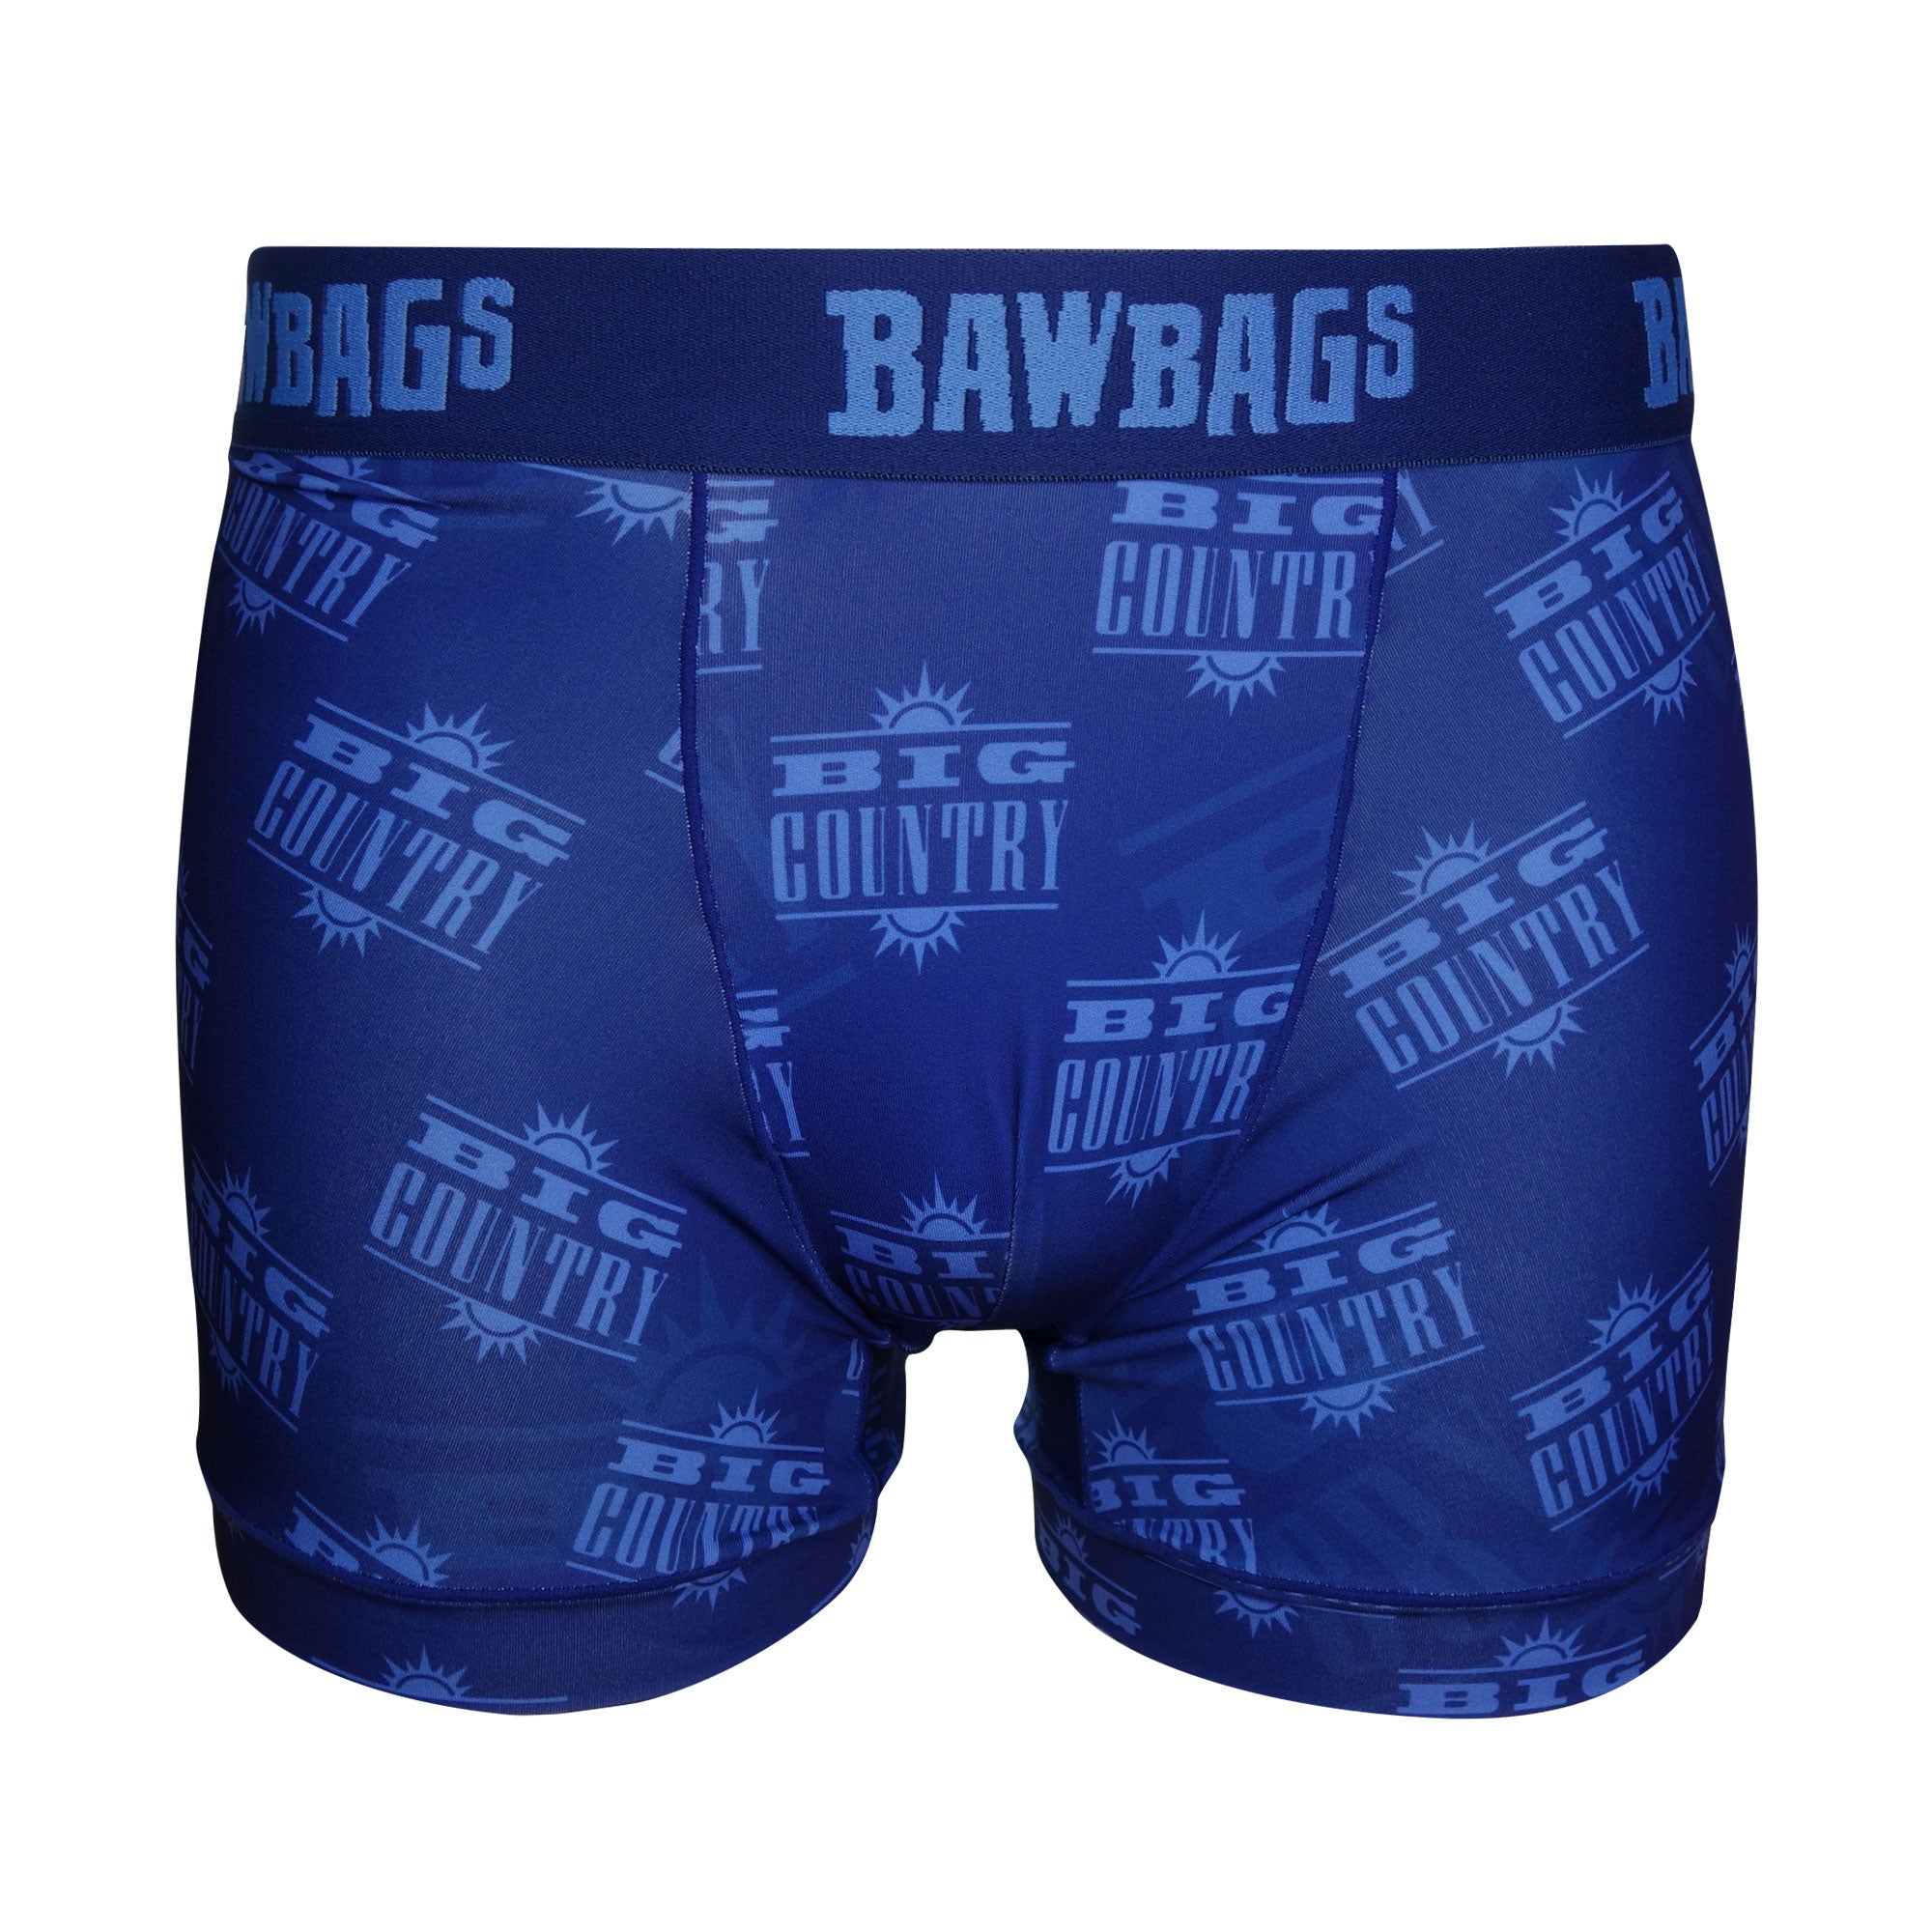 Cool De Sacs Big Country Boxer Shorts, Briefs - Bawbags